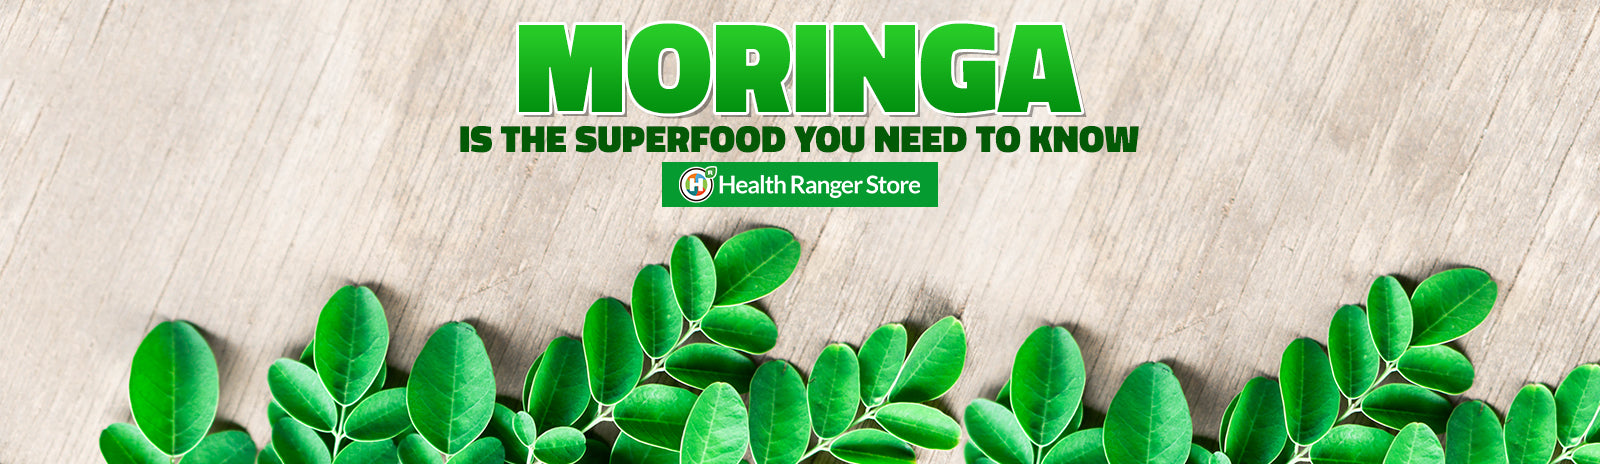 Moringa is the superfood you need to know